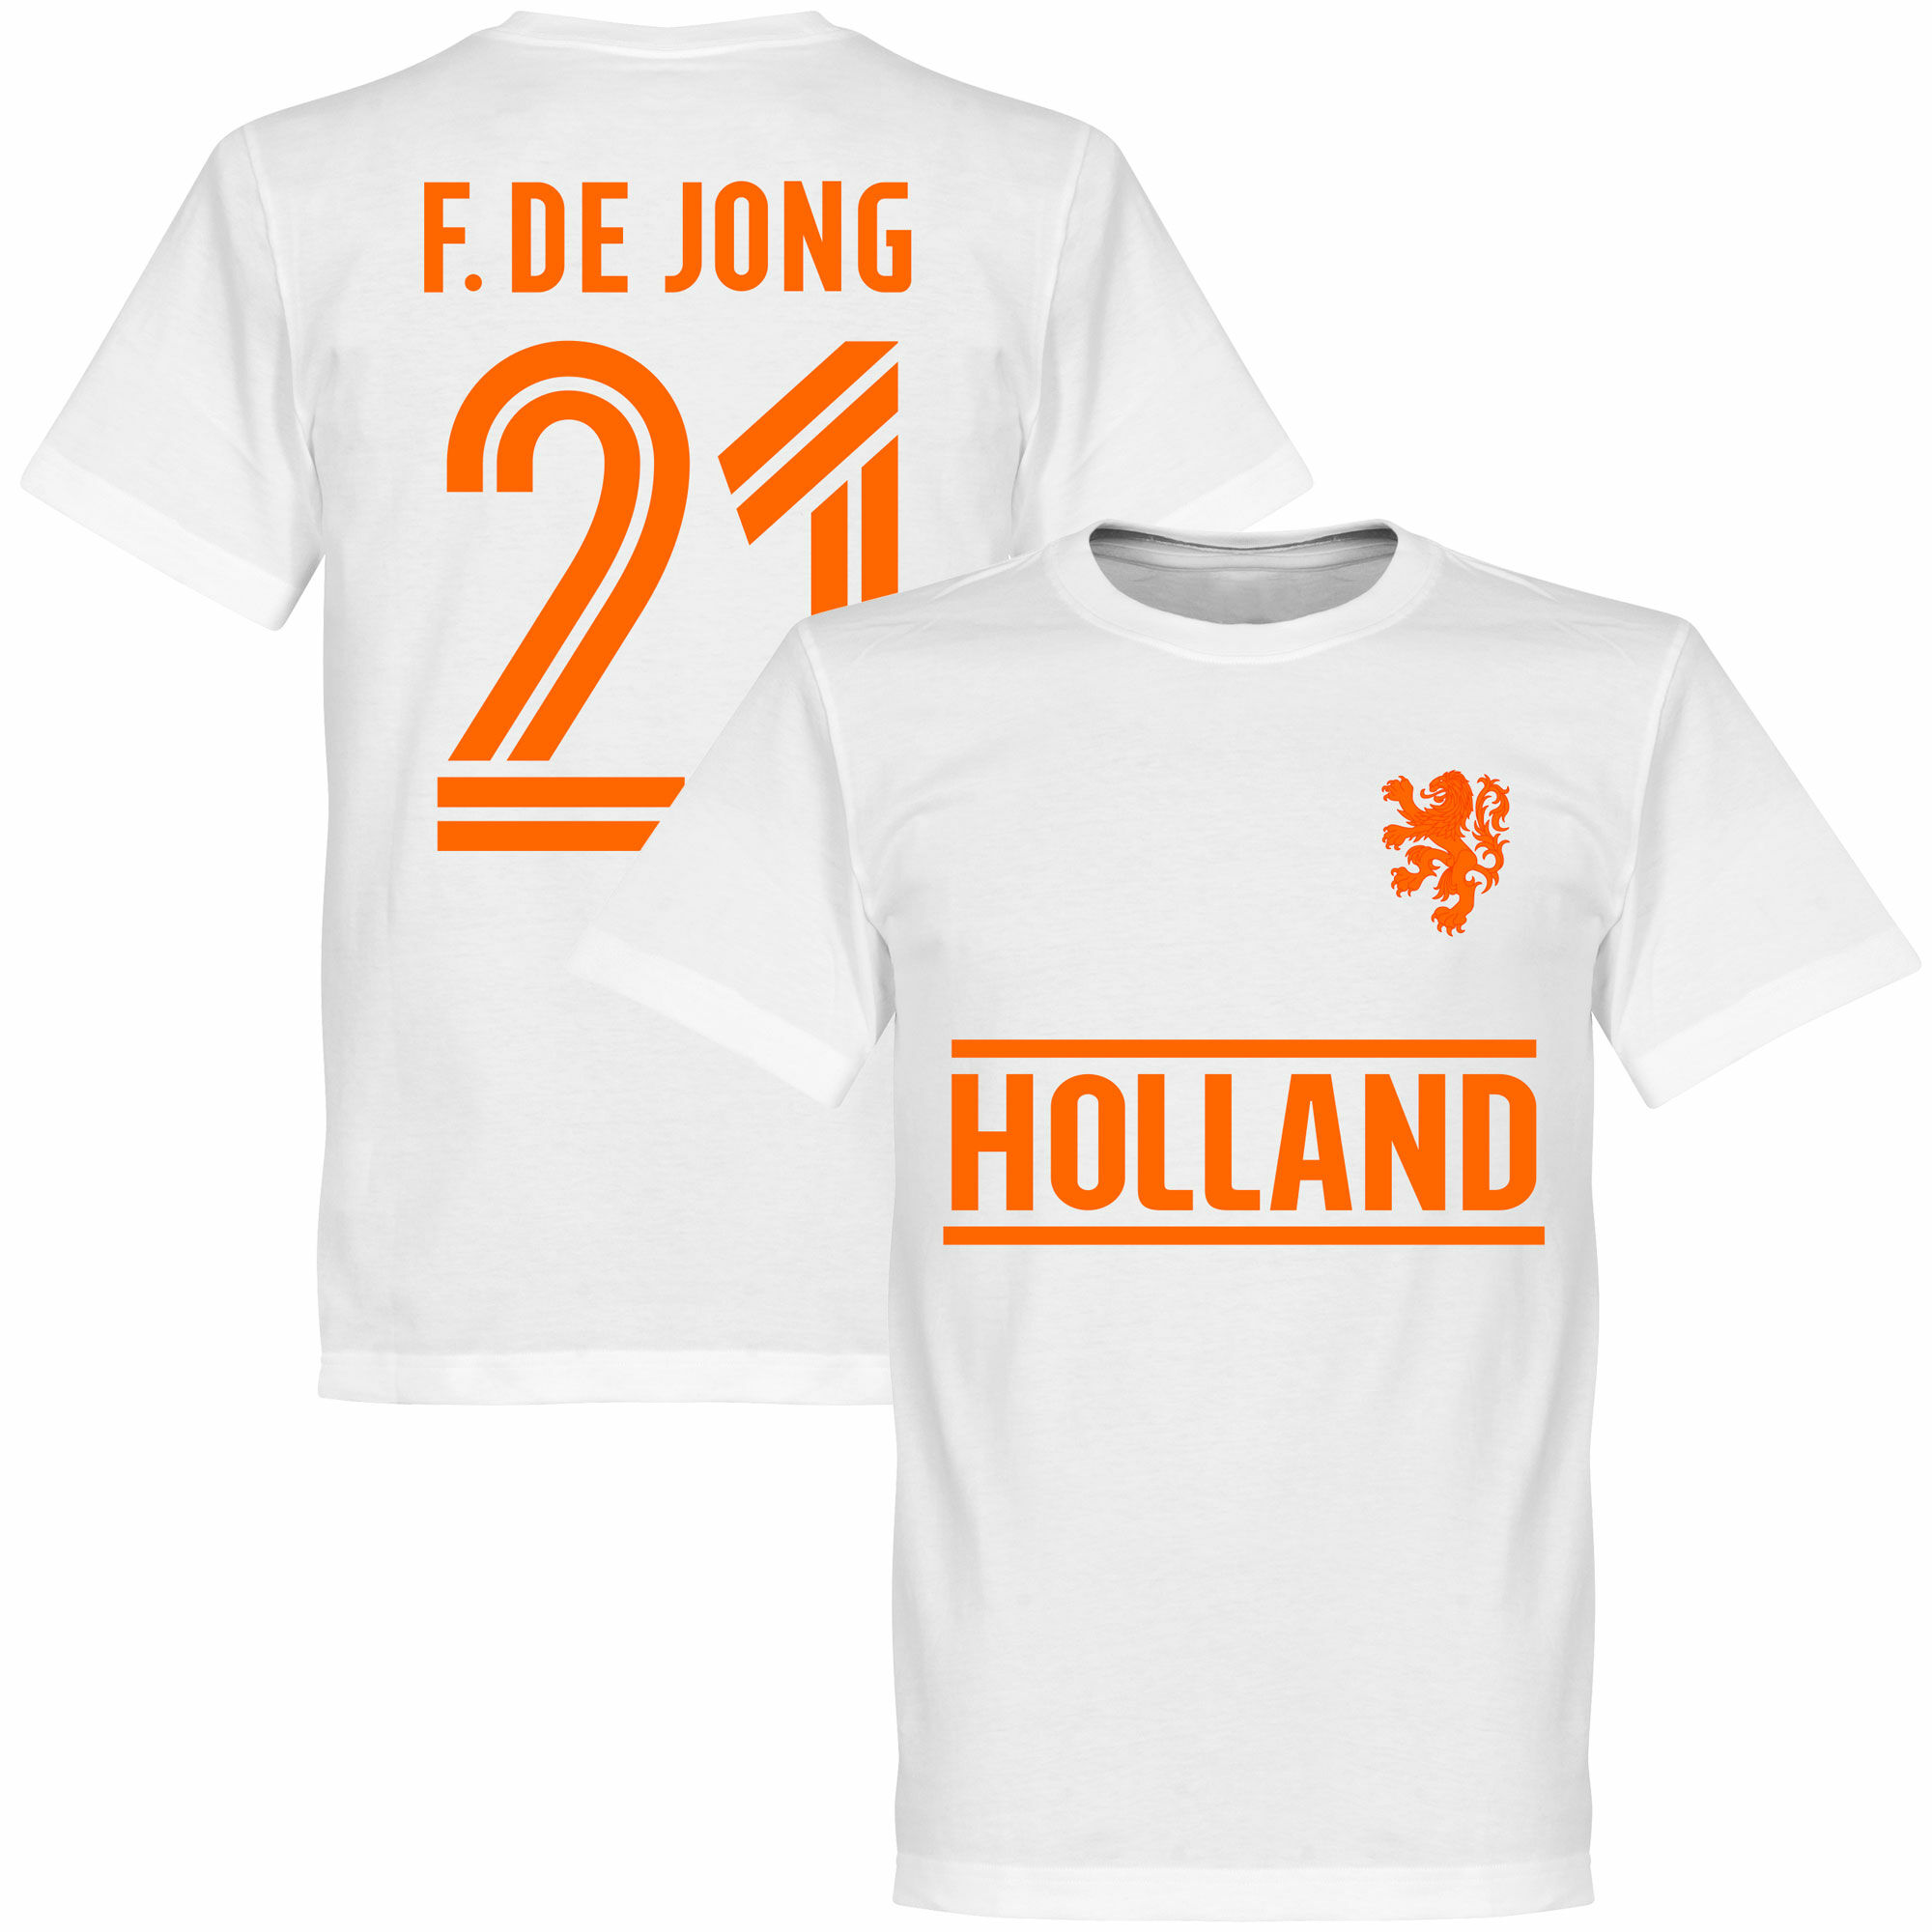 Nizozemí - Tričko - Frenkie de Jong, bílé